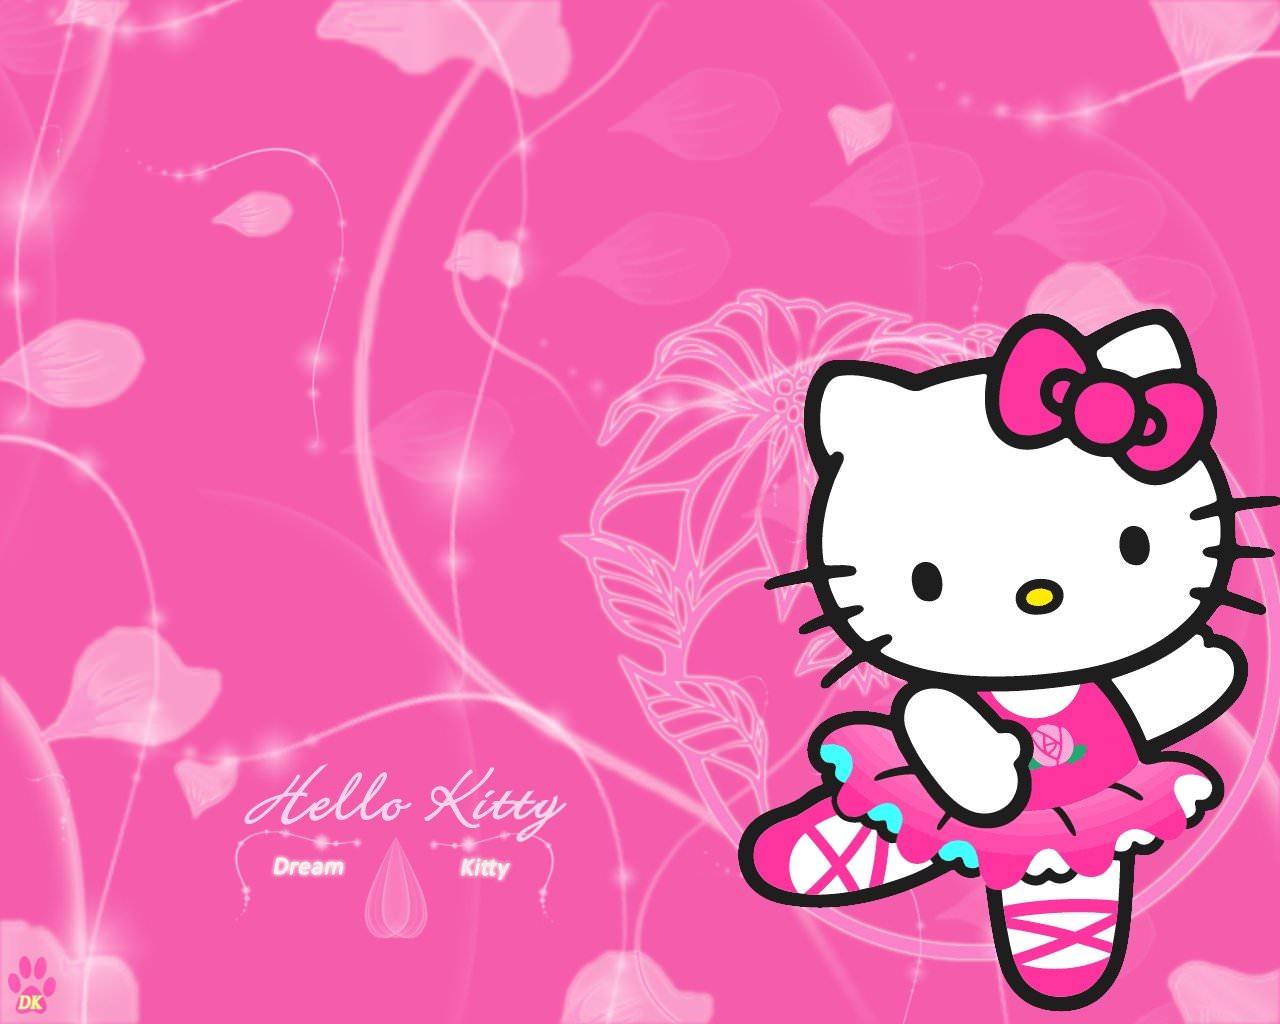 Hello Kitty wallpaper 1280x1024 desktop background